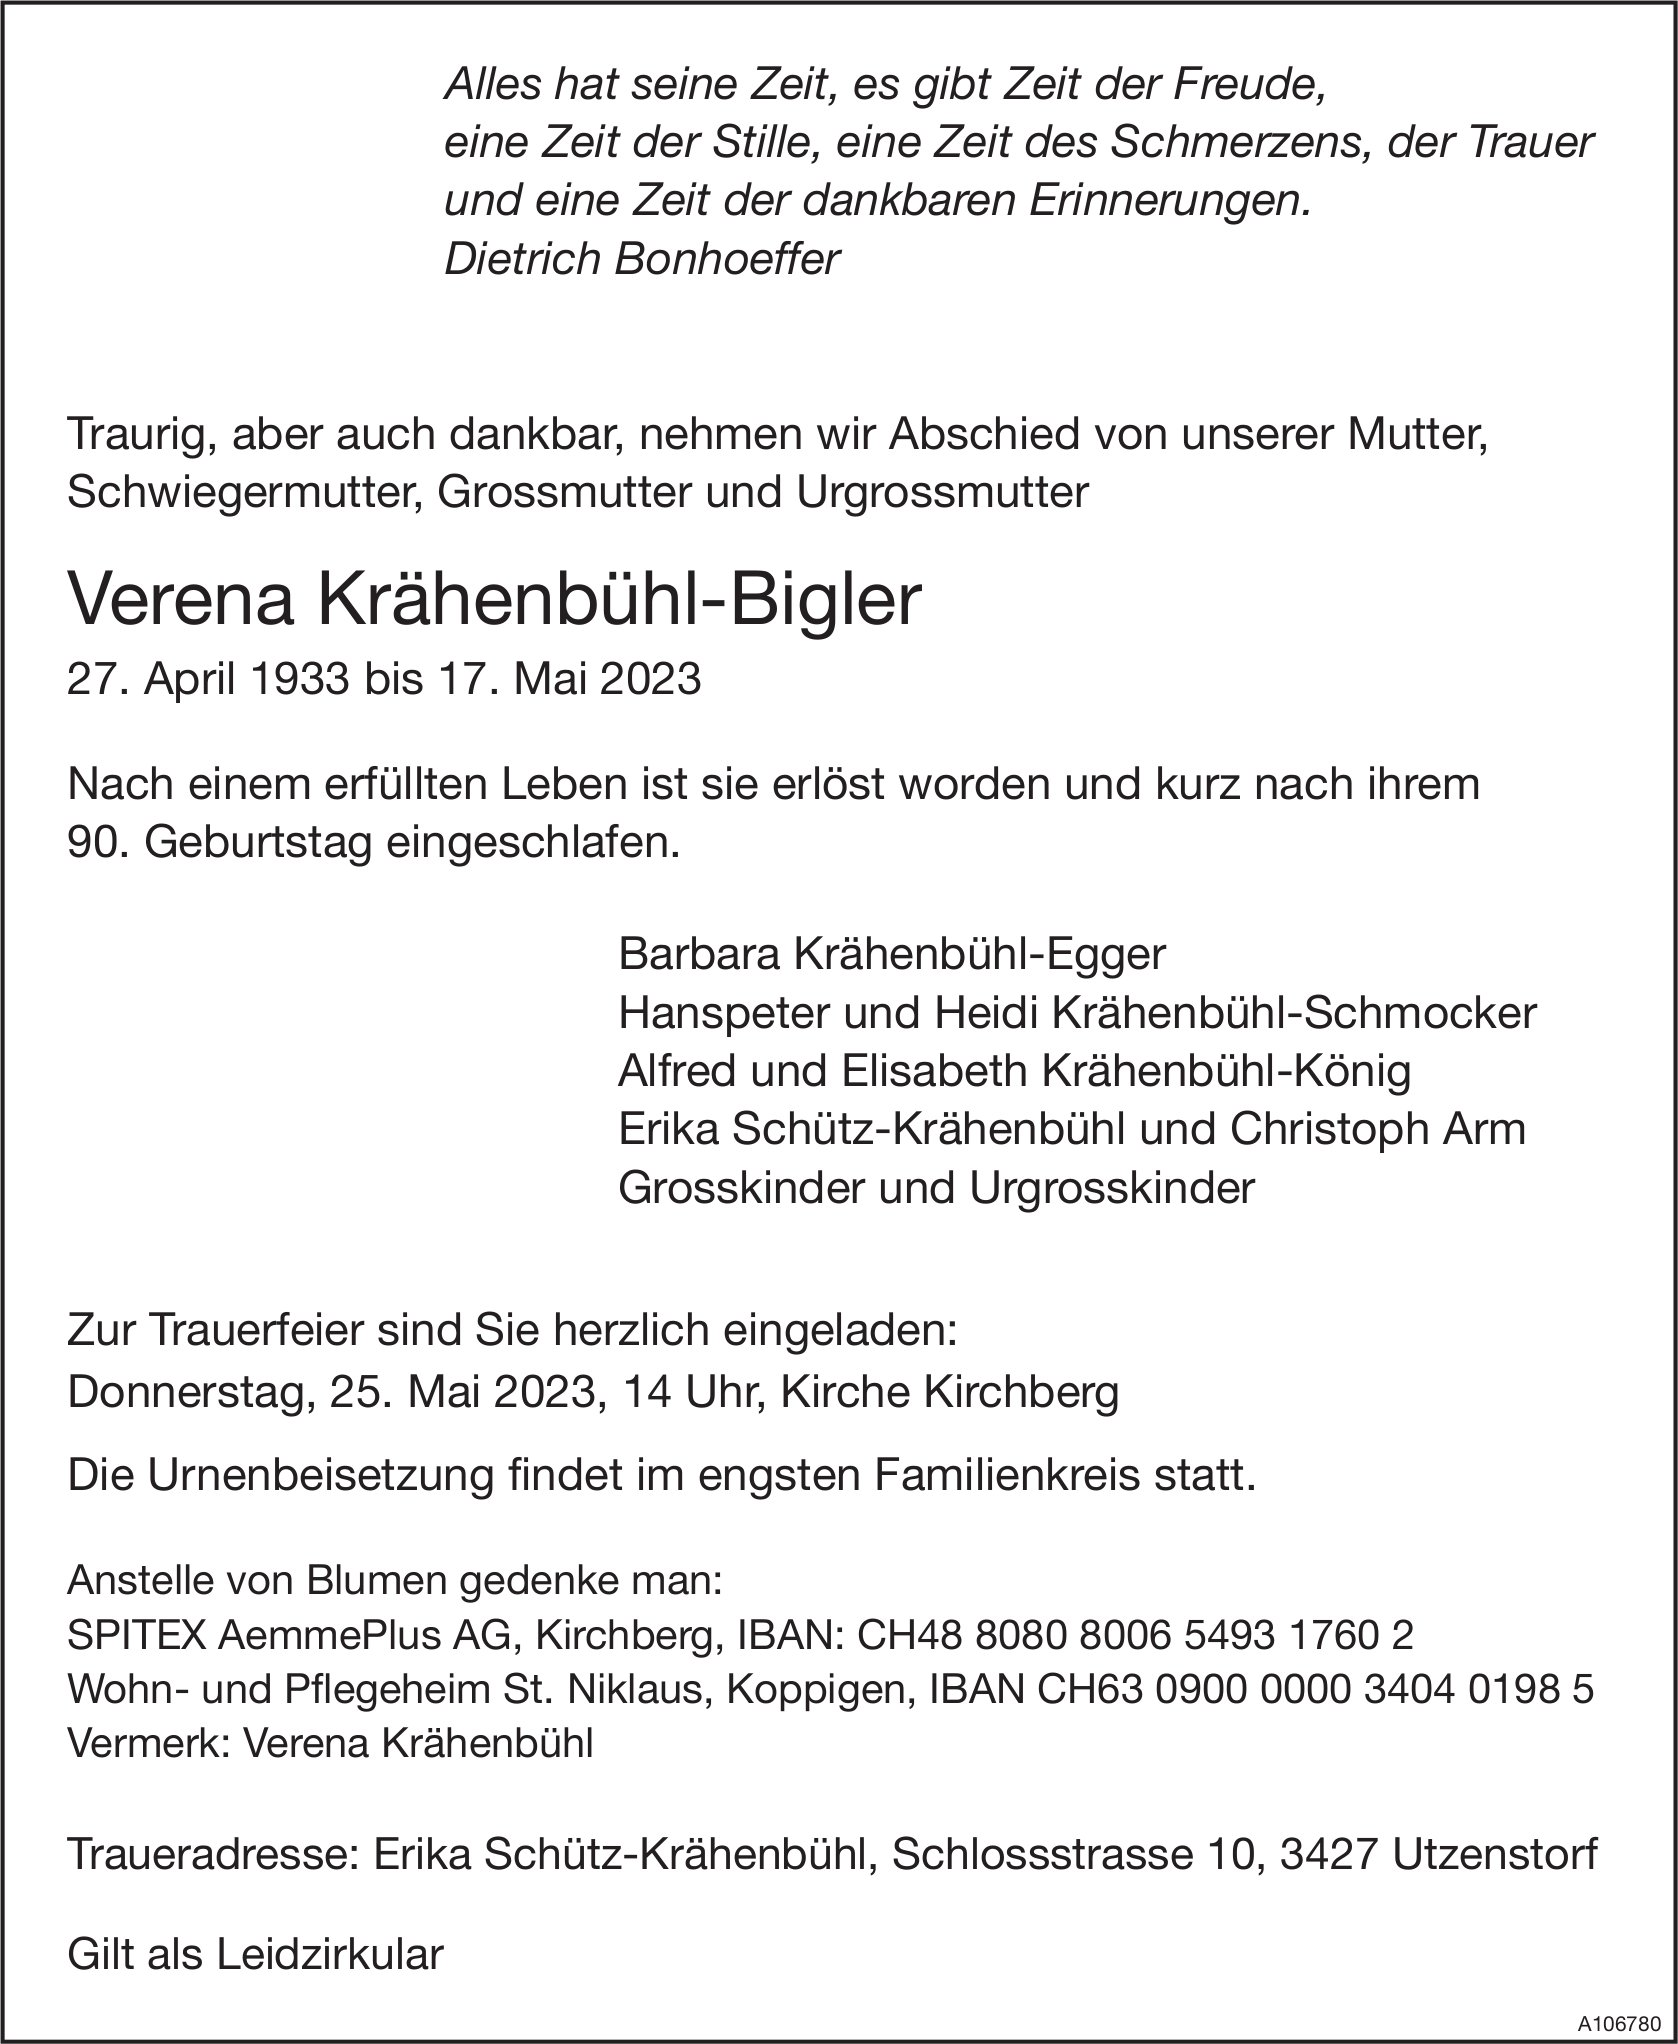 Verena Krähenbühl-Bigler, Mai 2023 / TA